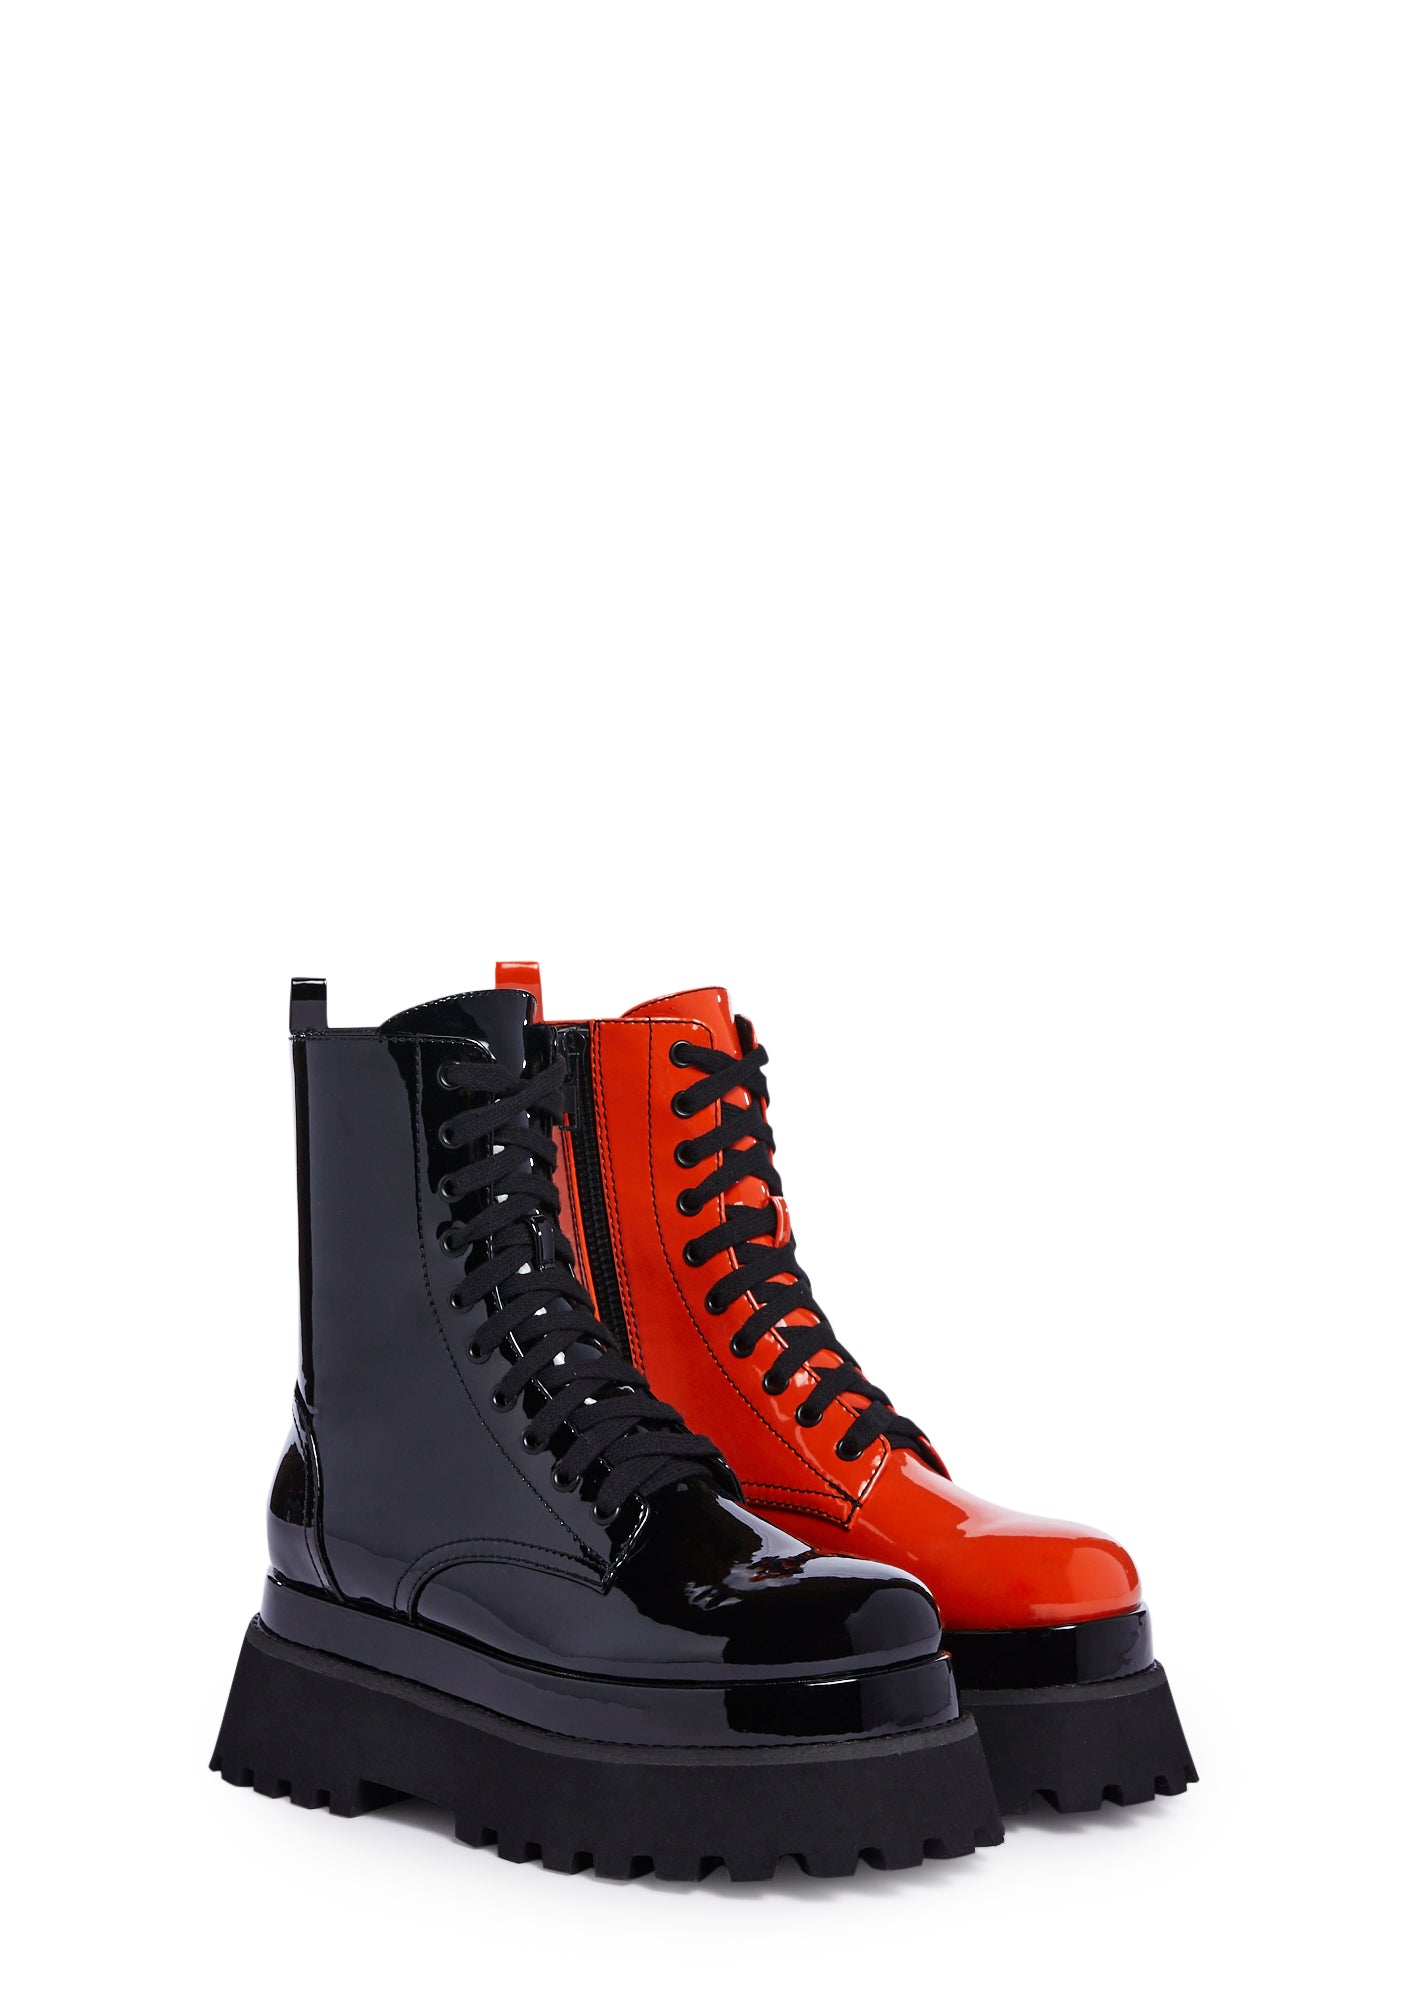 Trickz N Treatz Patent Mismatched Combat Boots - Black/Orange